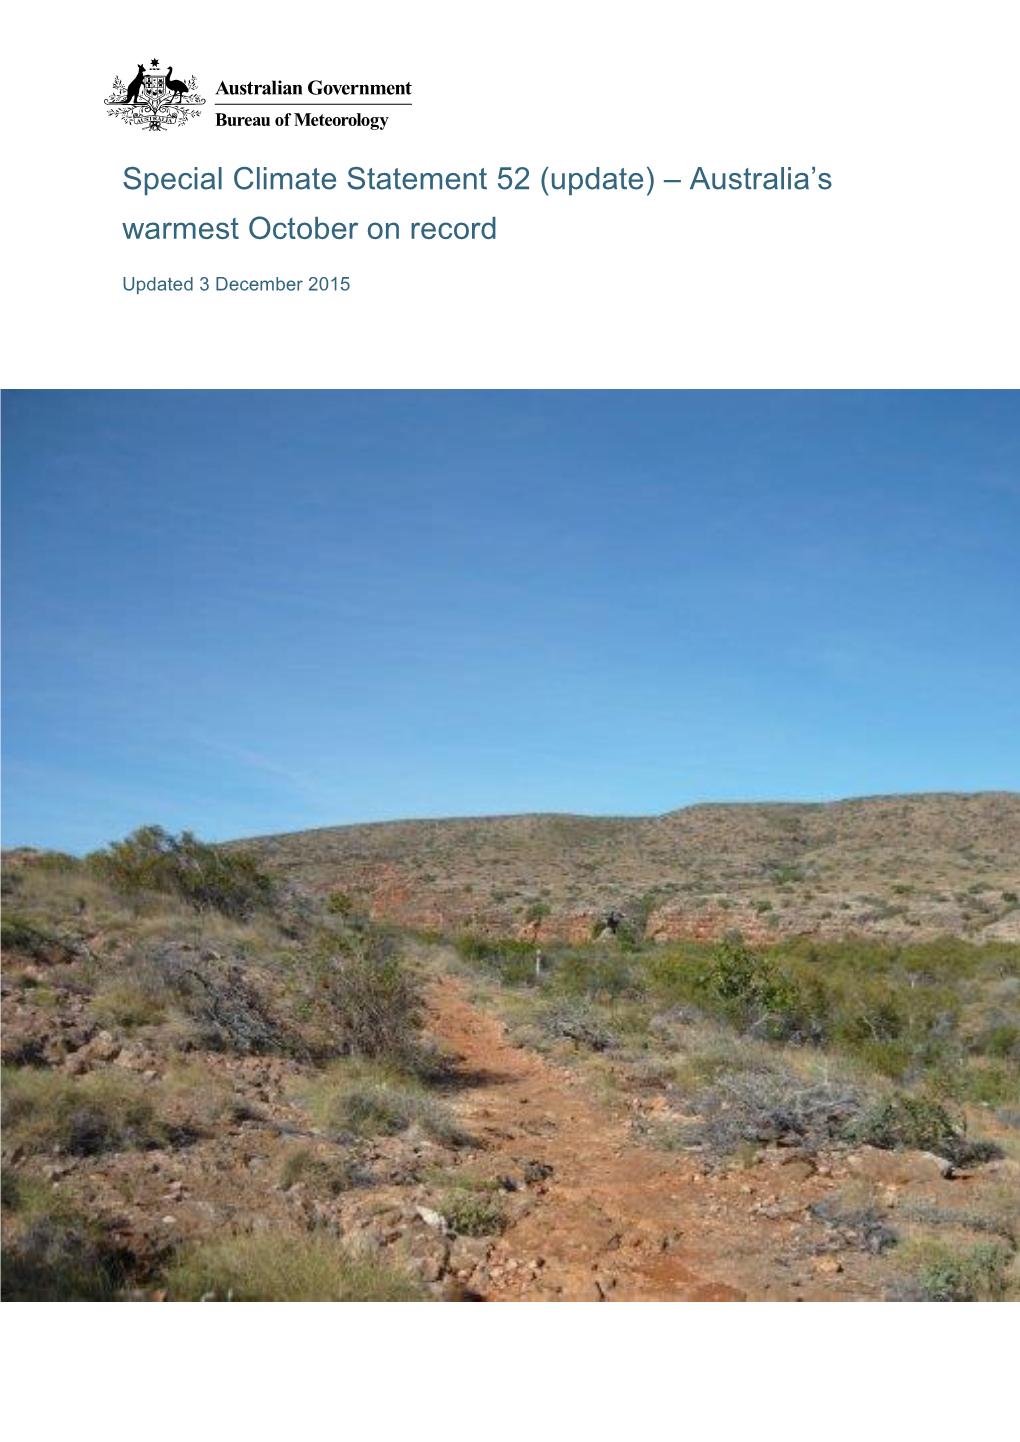 Special Climate Statement 52 (Update) – Australia's Warmest